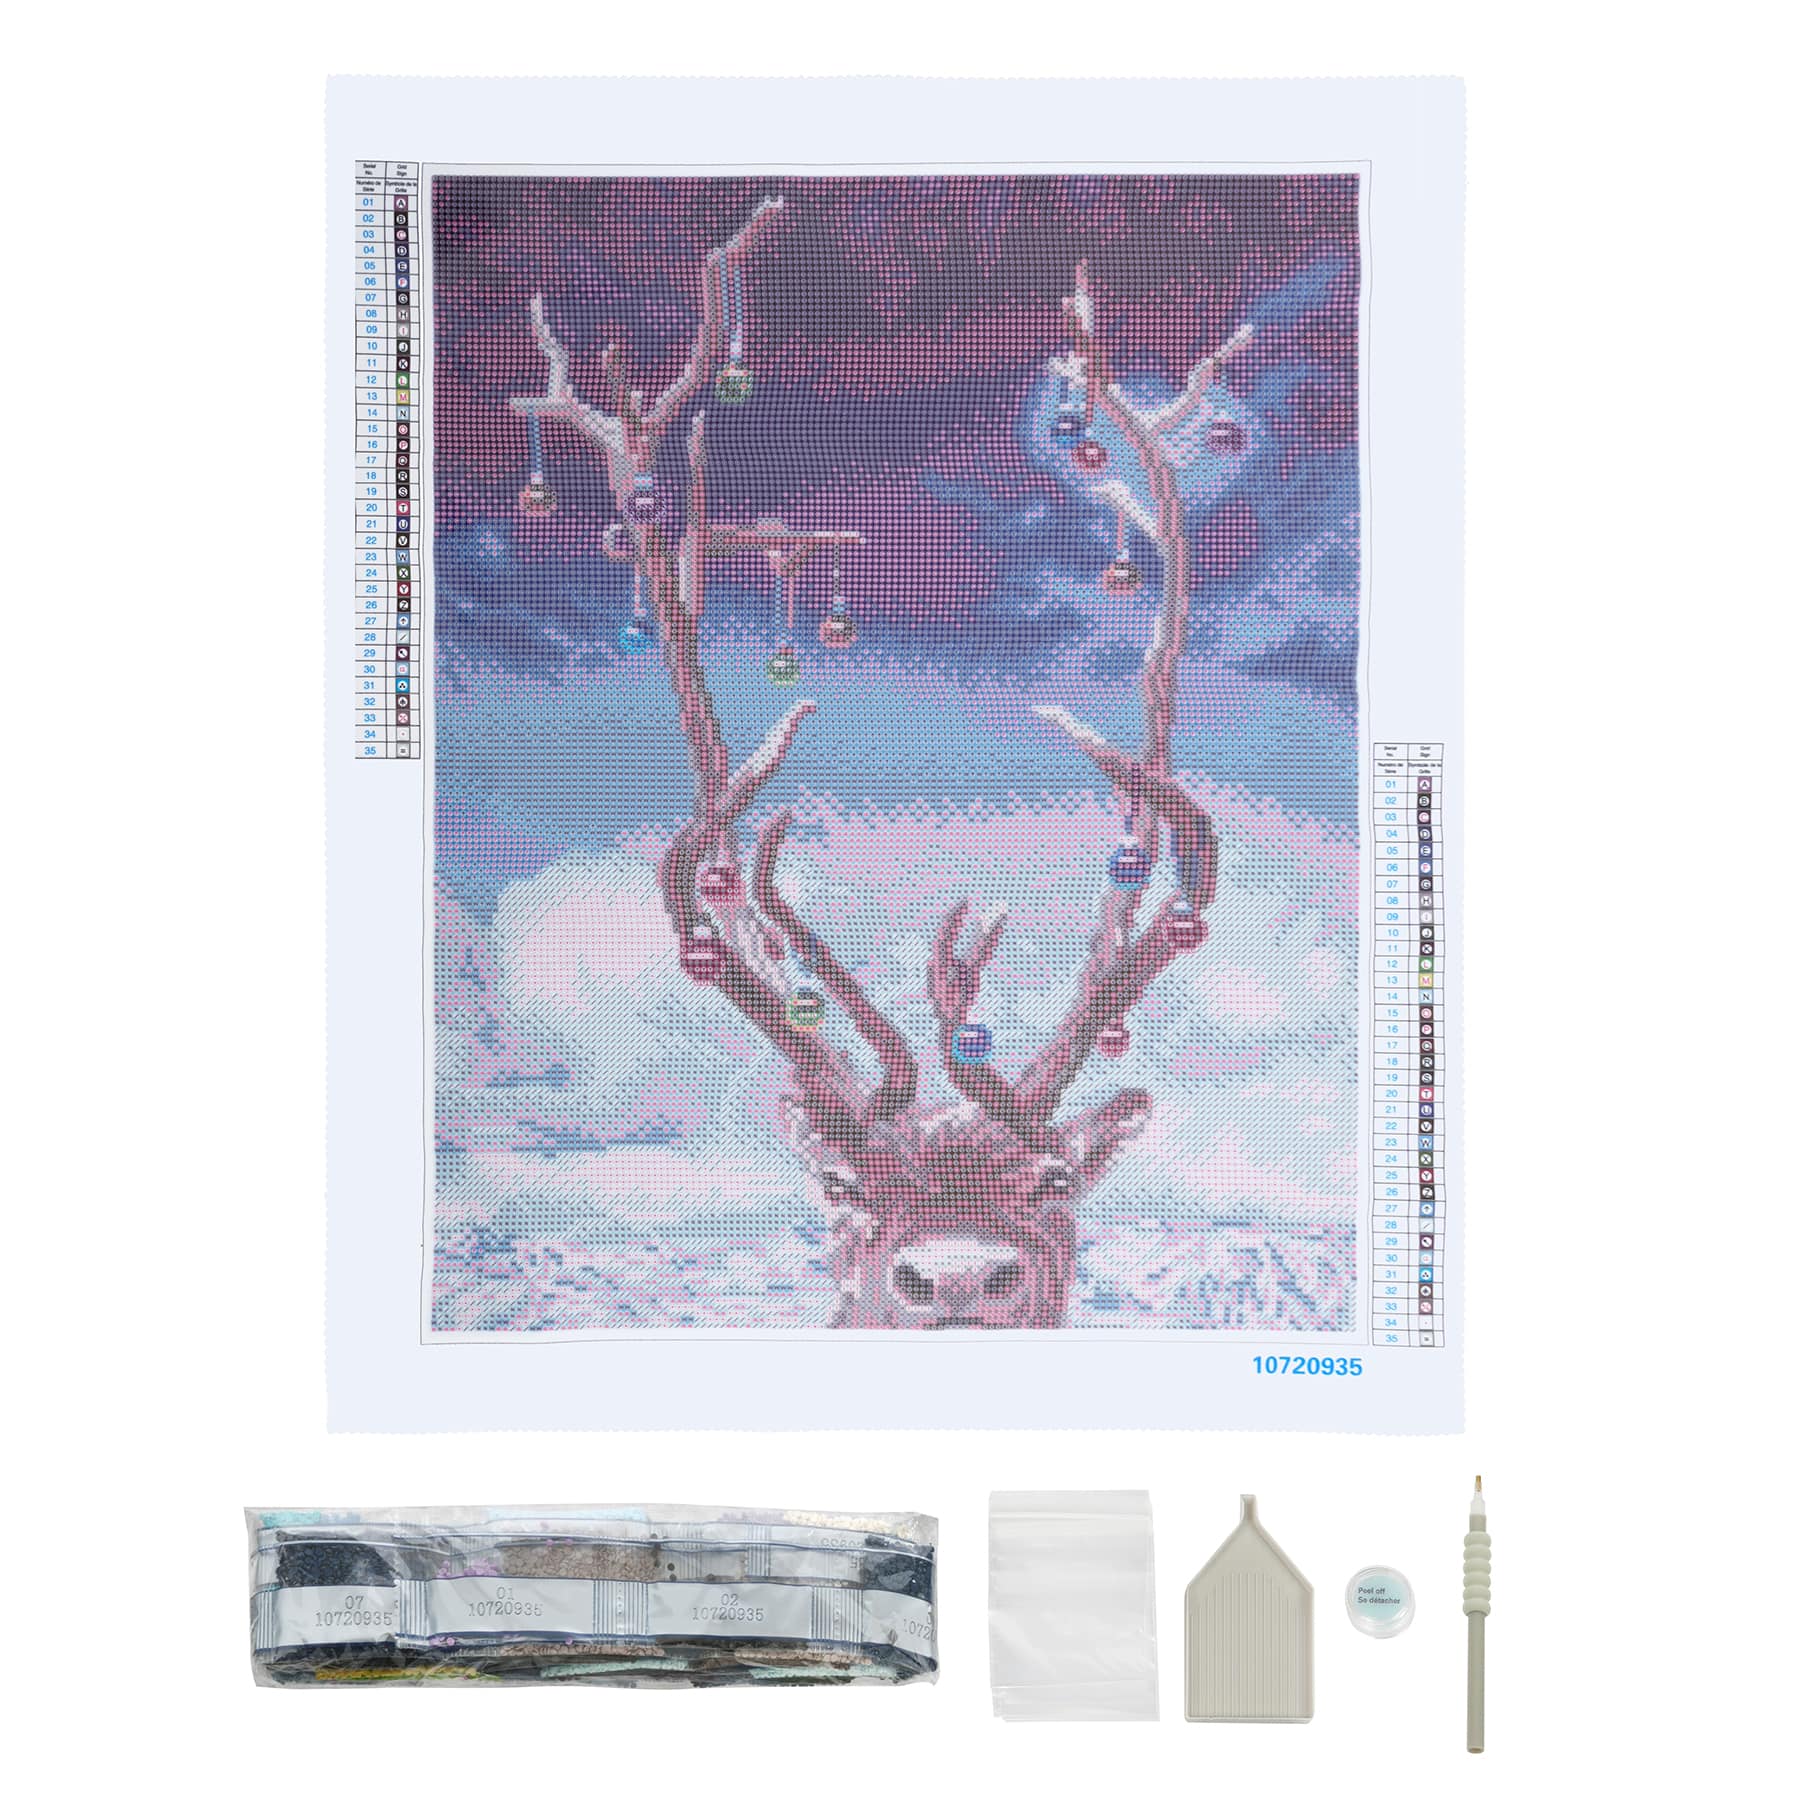 Camouflage Diamond Art Kit by Make Market Paint | 11.2 x 9.2 | Michaels